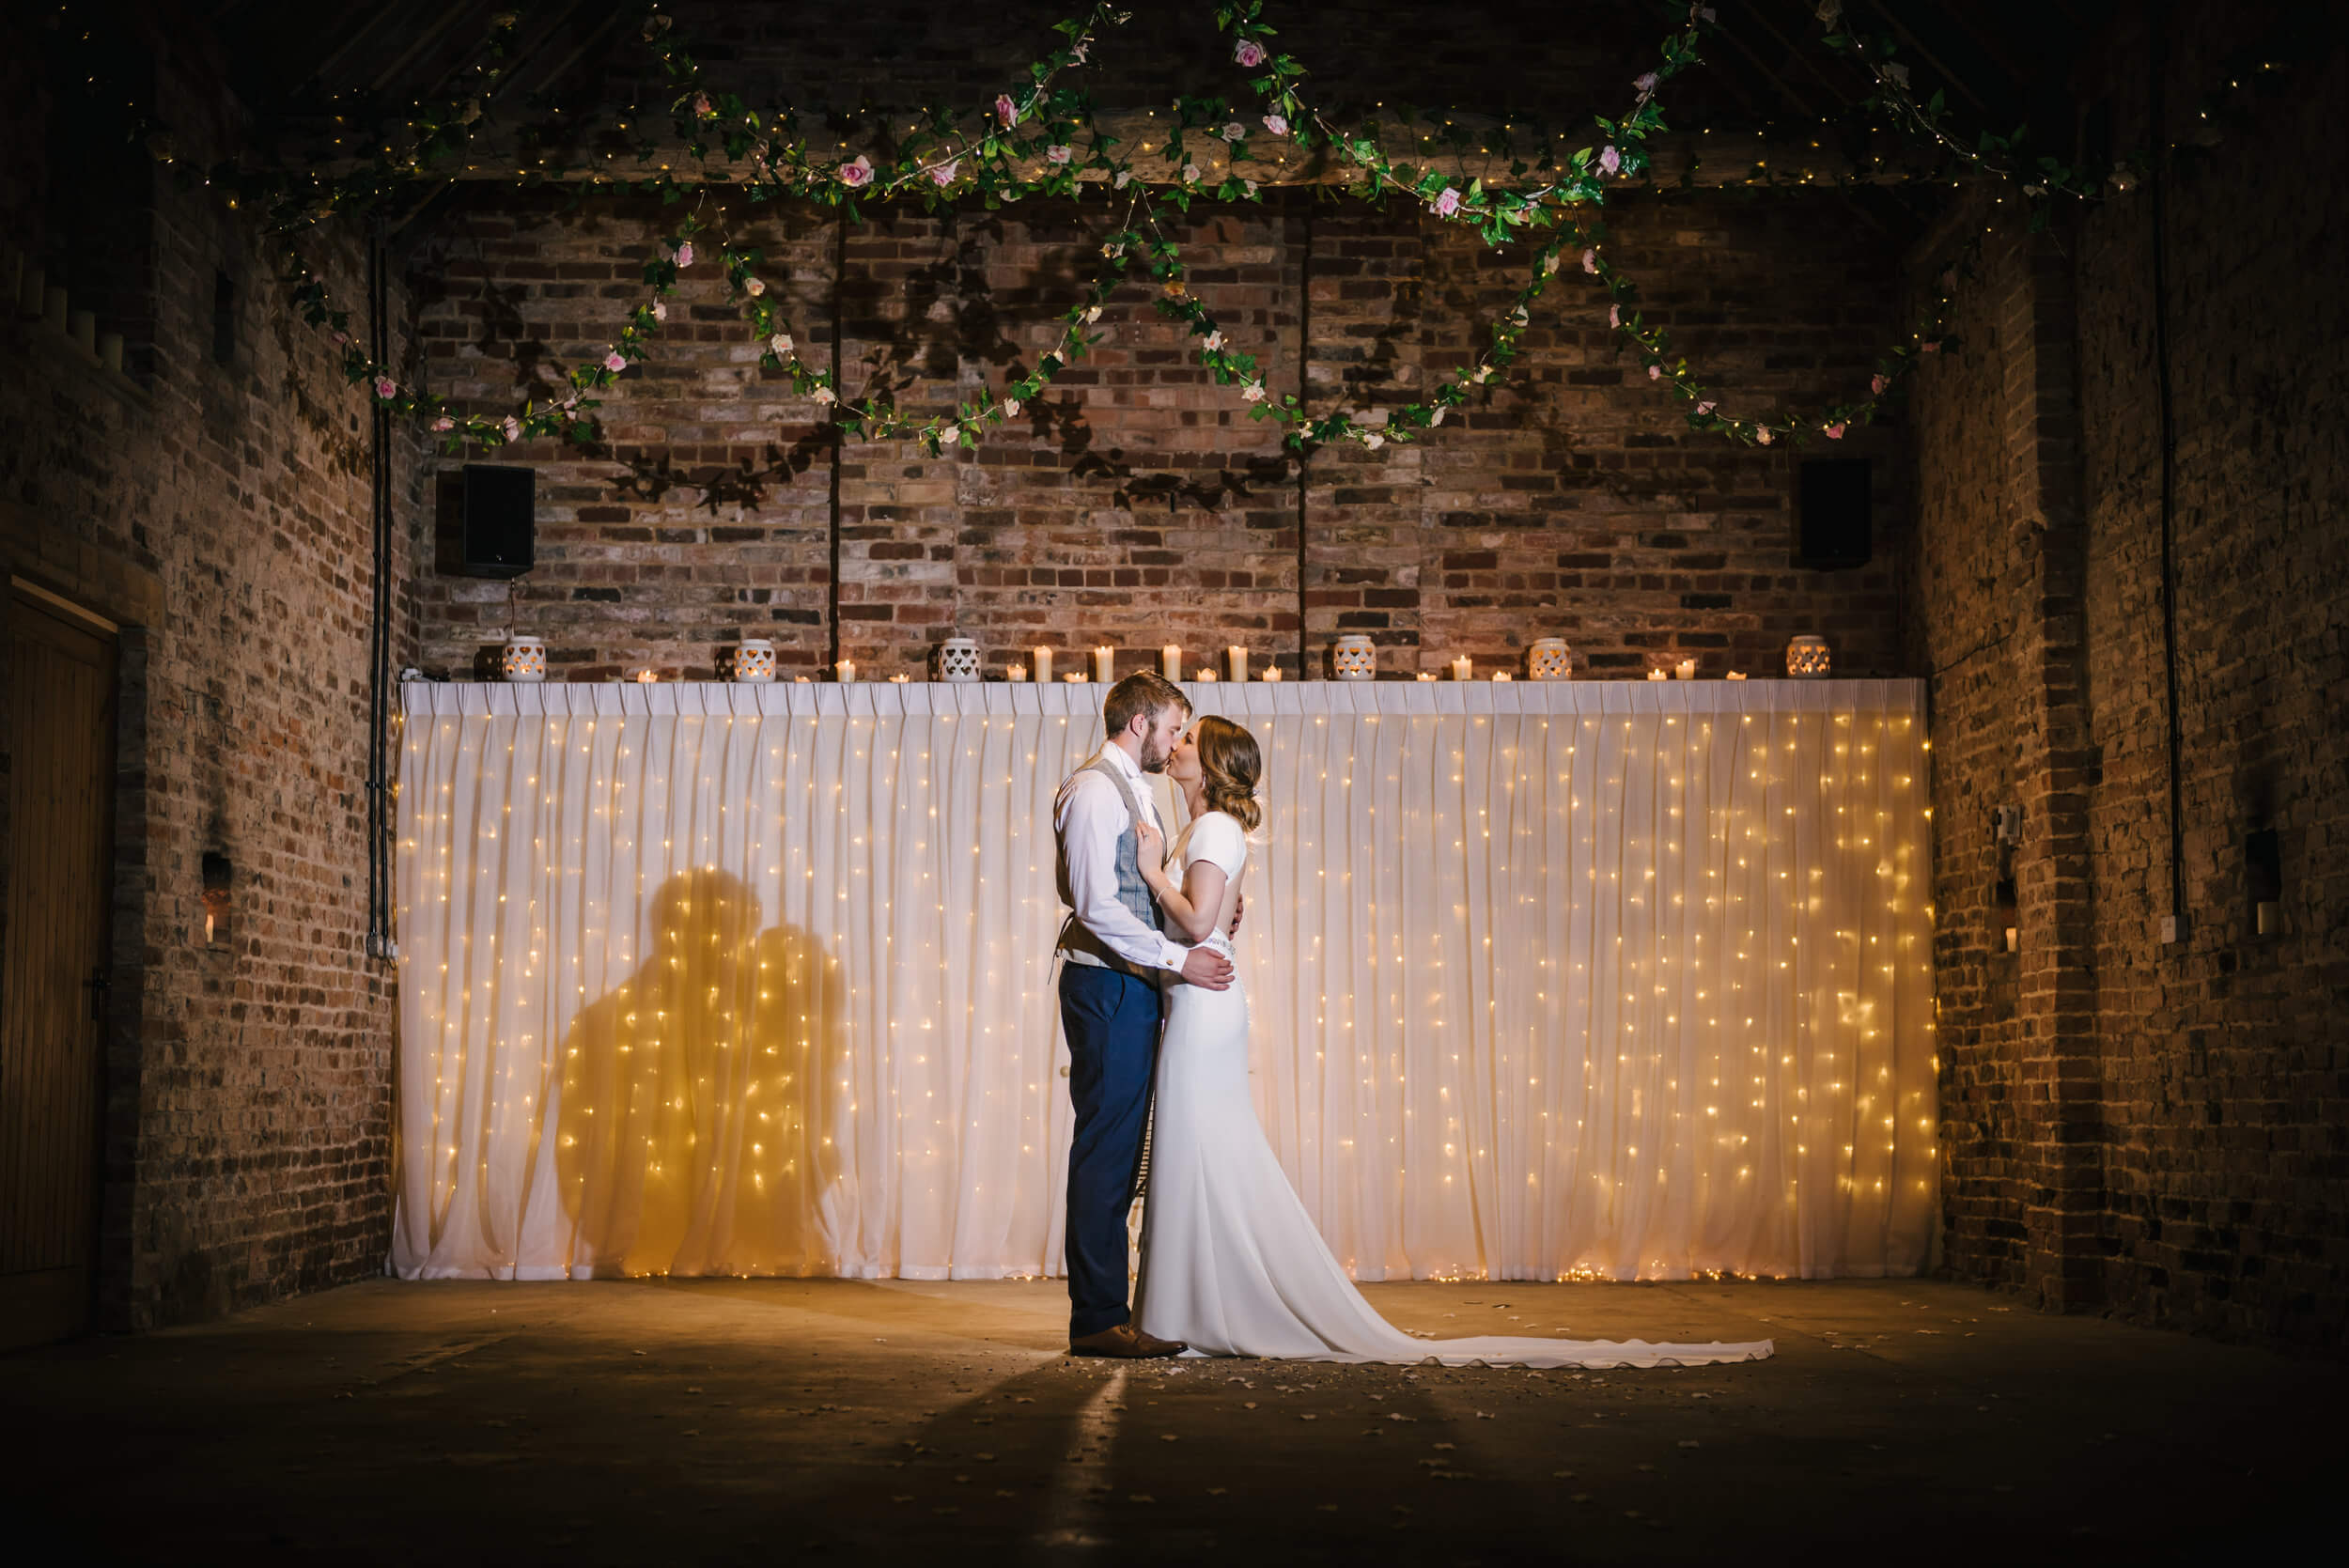 newlyweds kiss at barmyfield barns a barn wedding venue in york